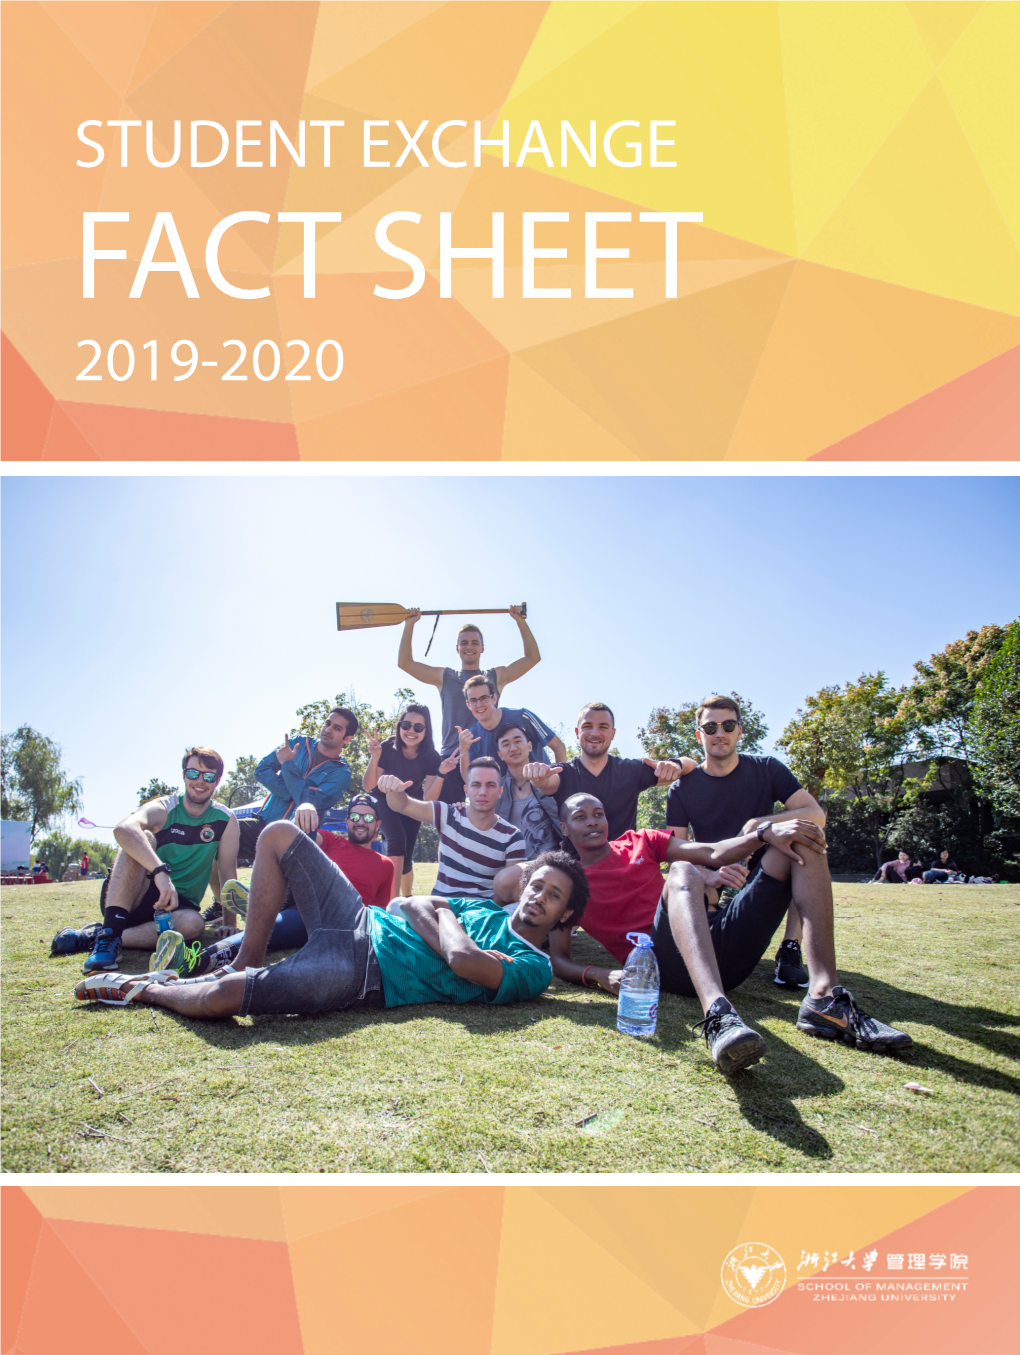 Student Exchange Fact Sheet 2019-2020 Institution Information